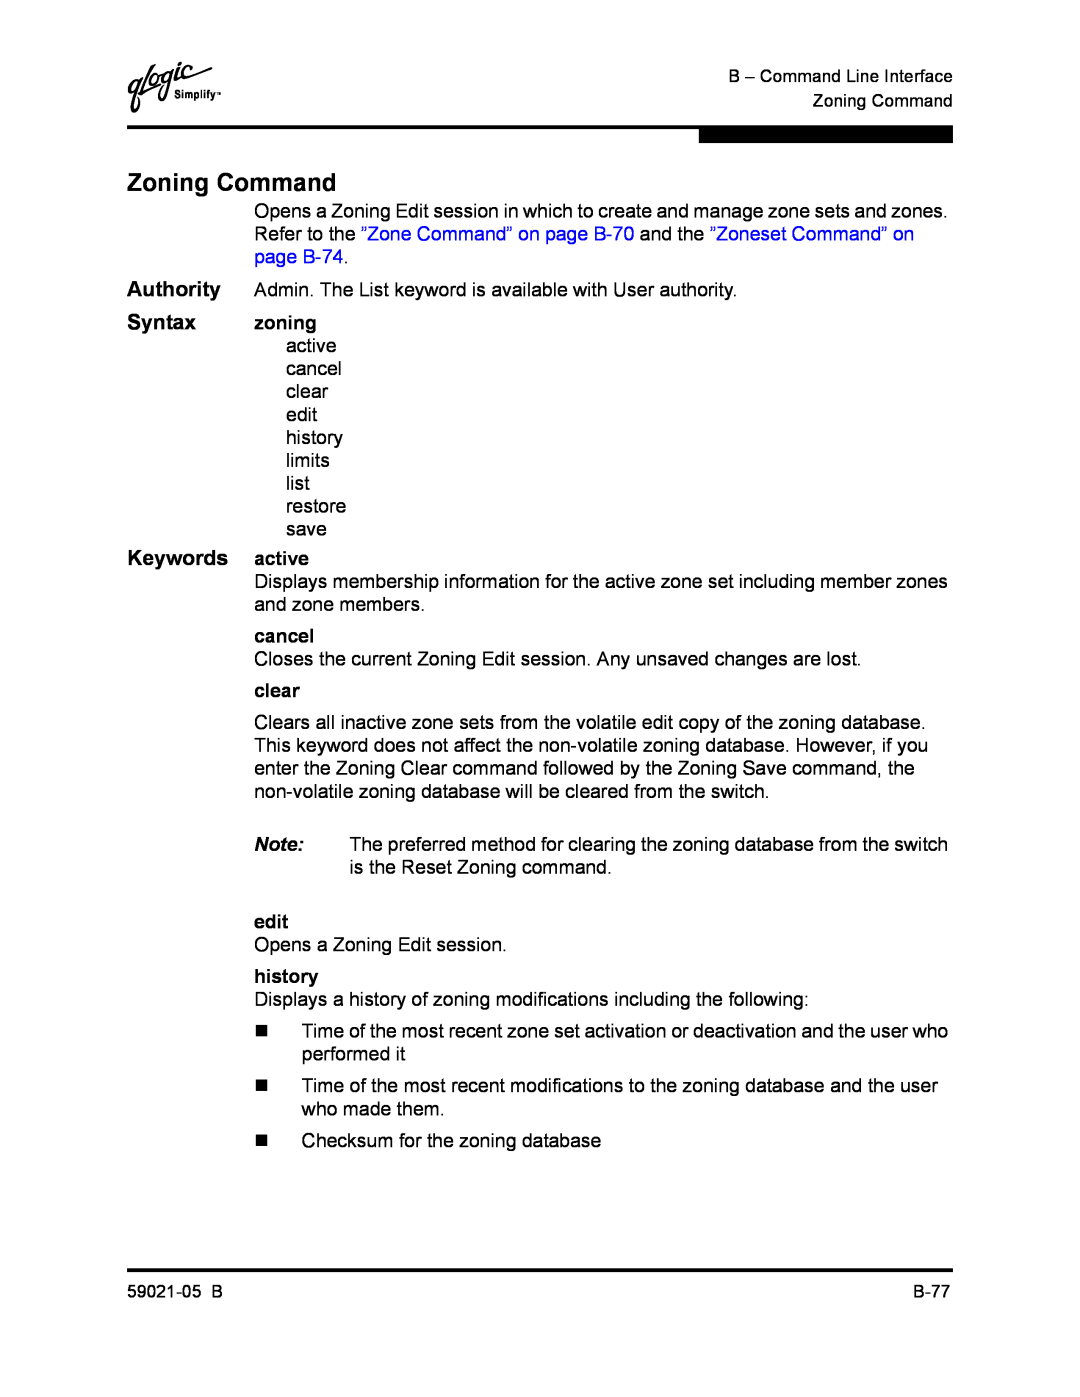 Q-Logic 59021-05 B manual Zoning Command, Keywords active 